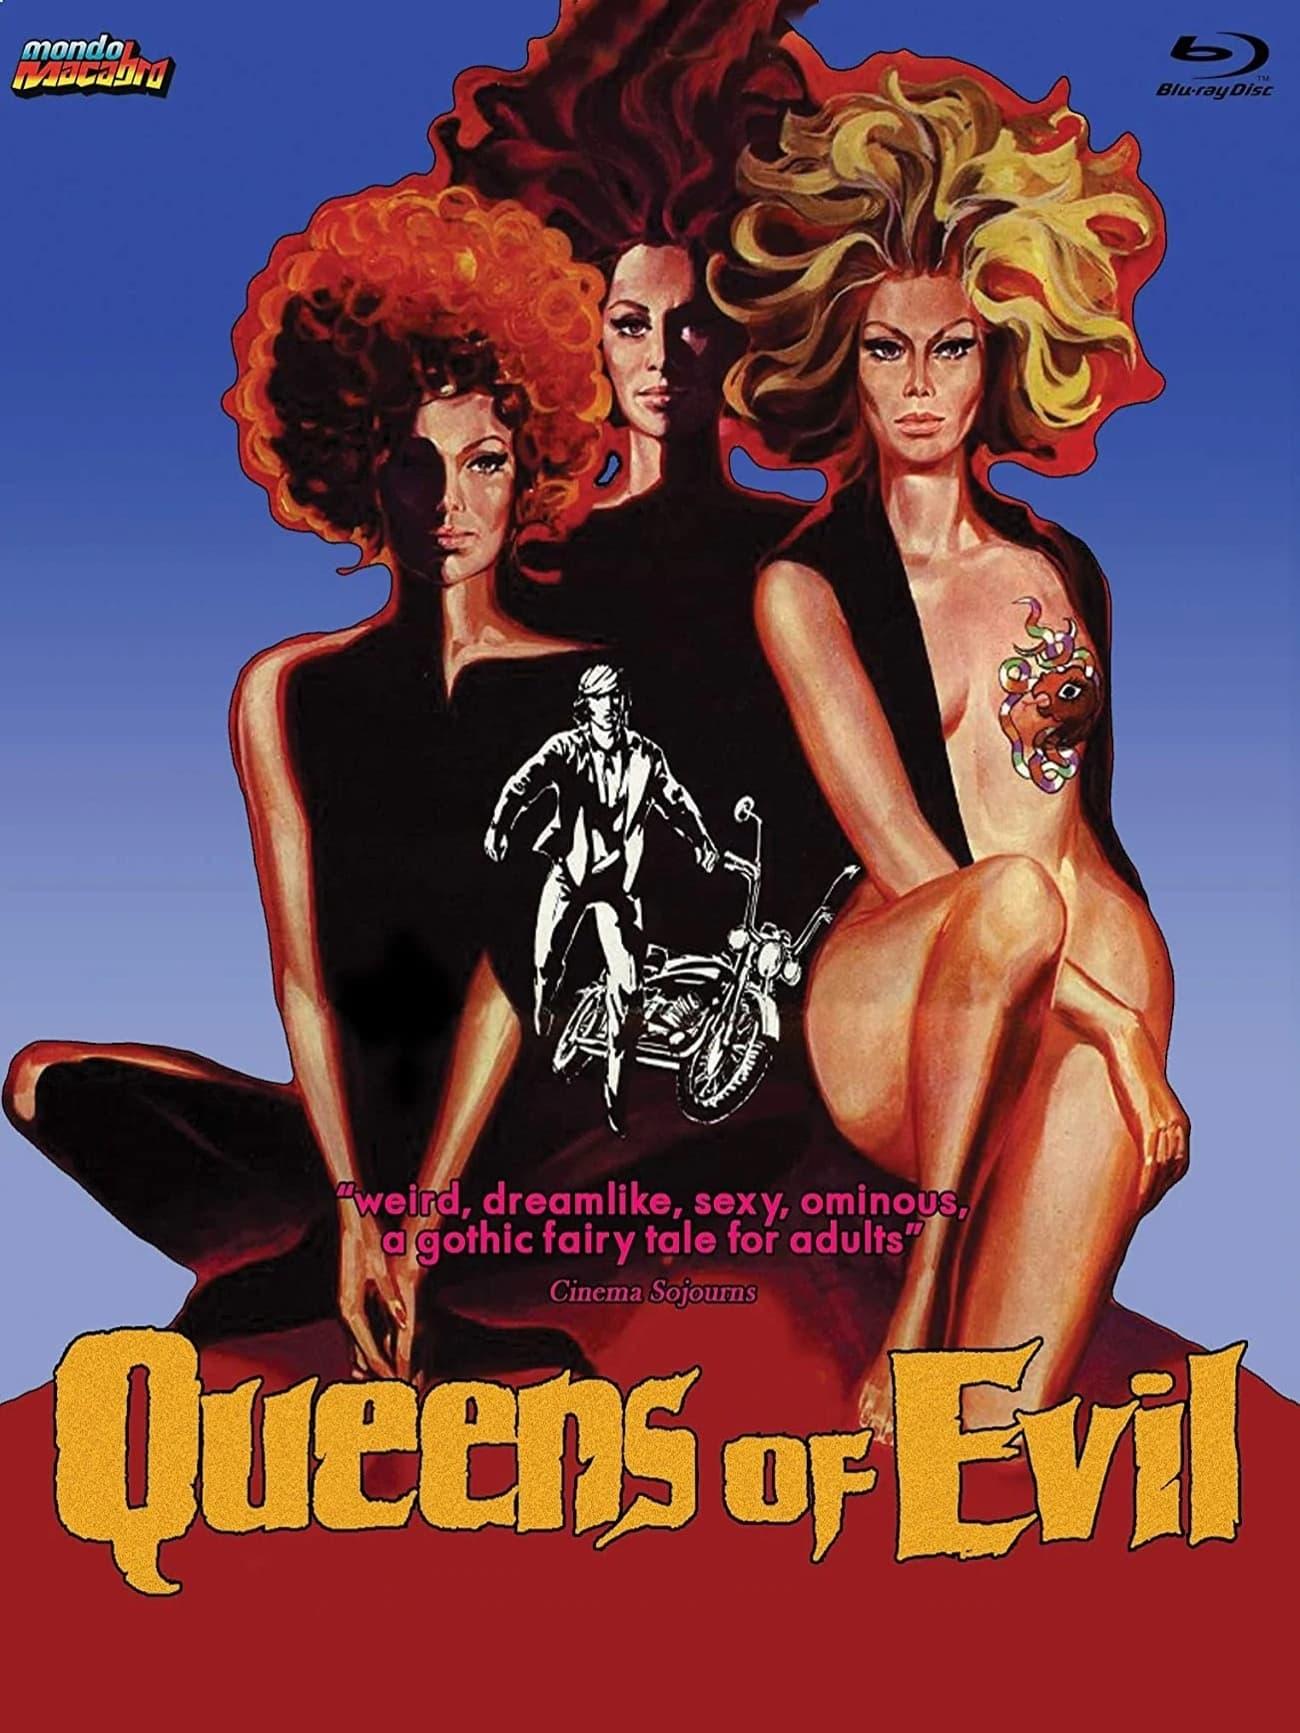 Queens Of Evil poster